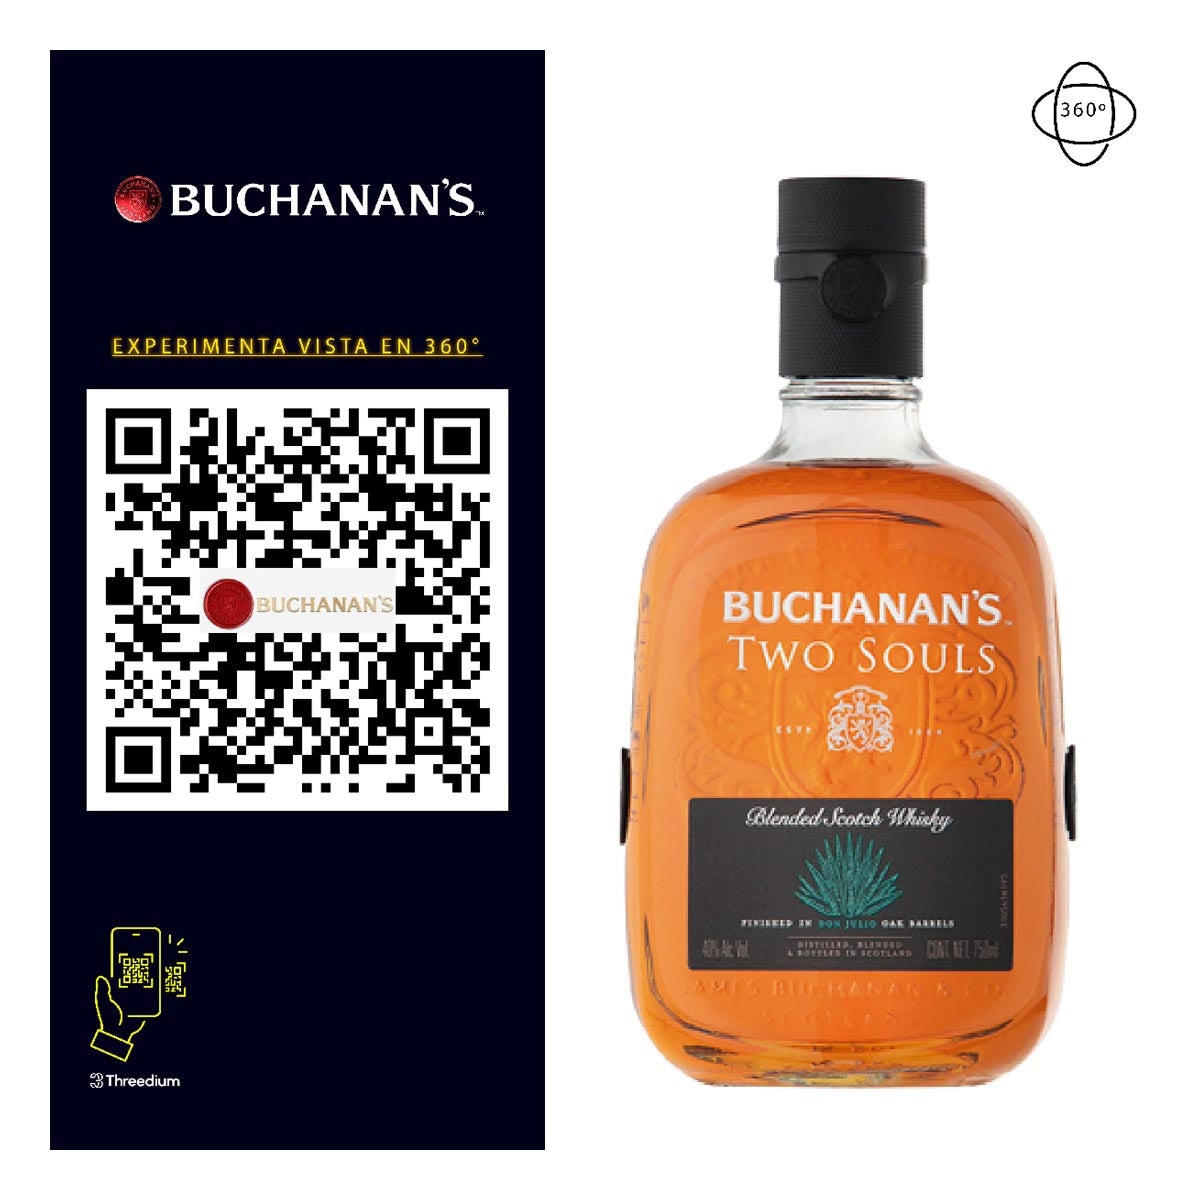 Whiskey Buchanans Two Souls 750ml